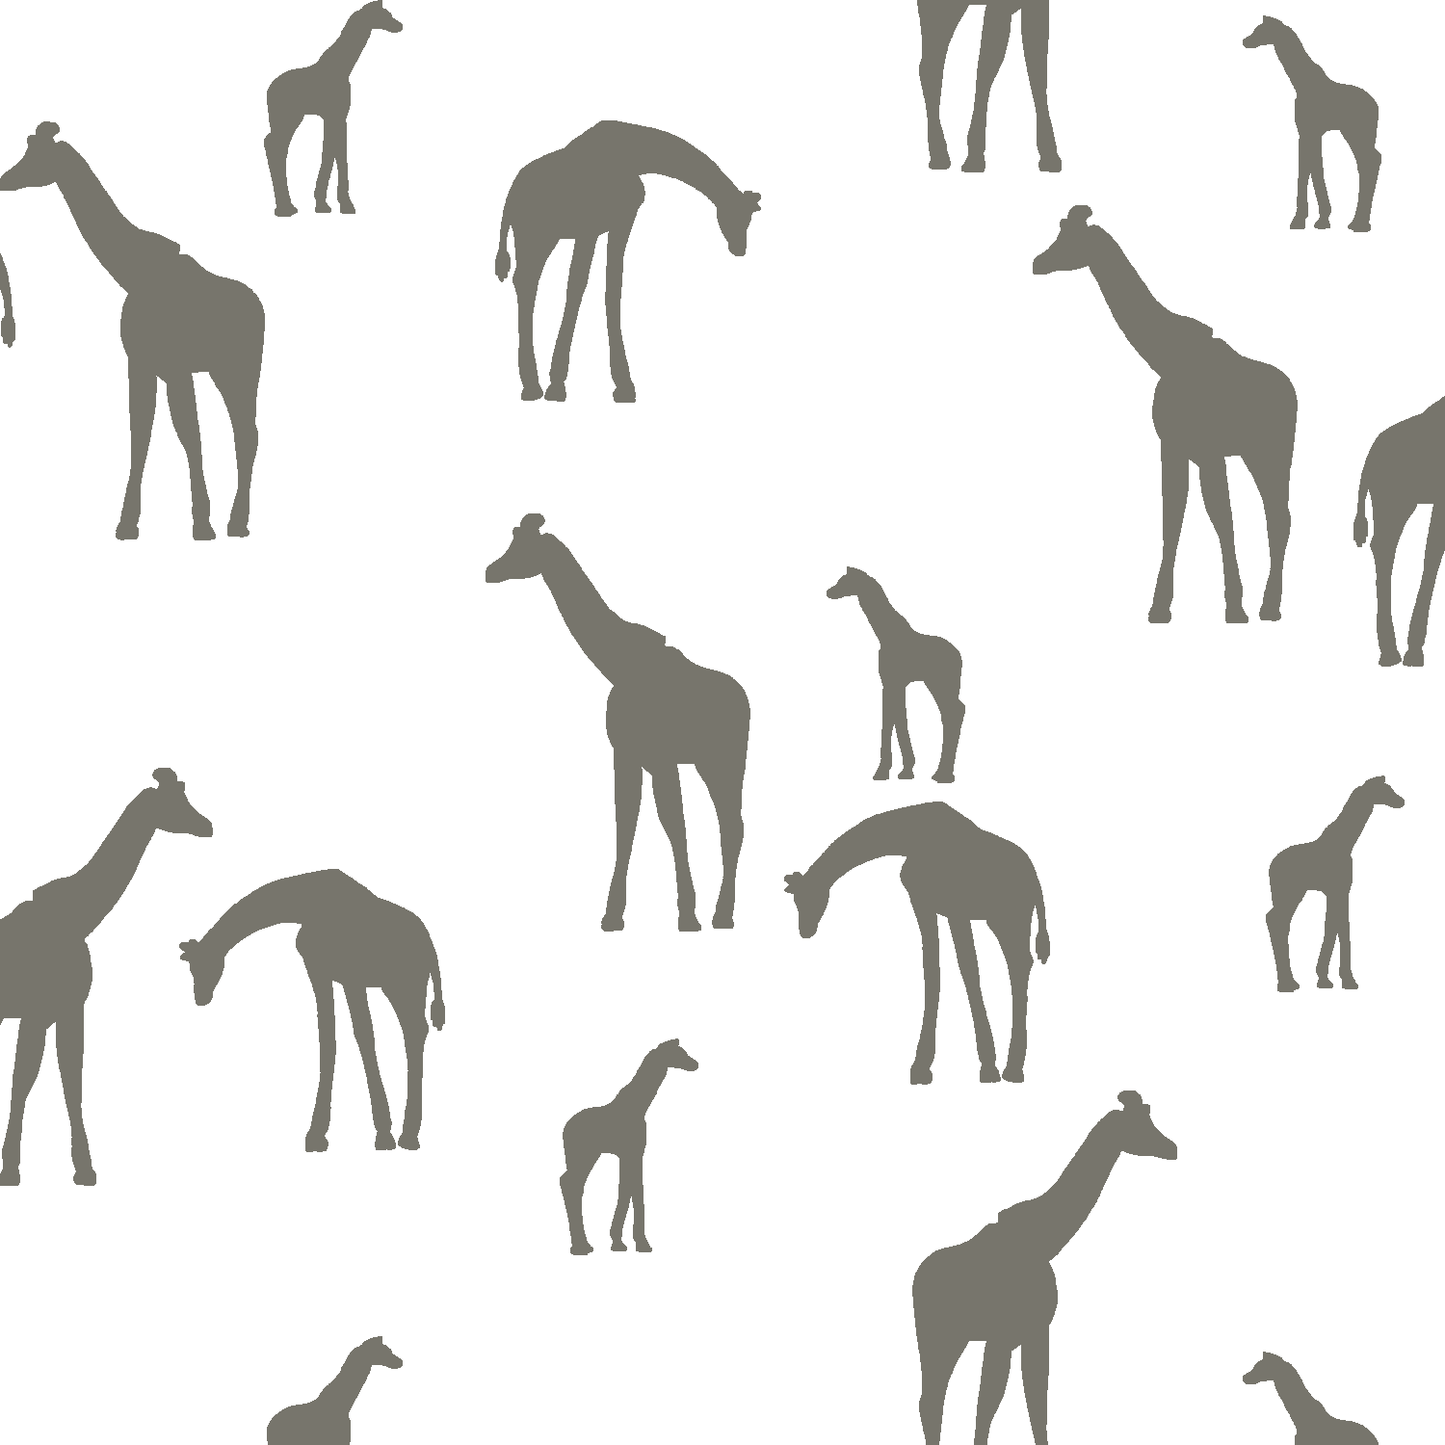 Giraffe Silhouette in Griege on White